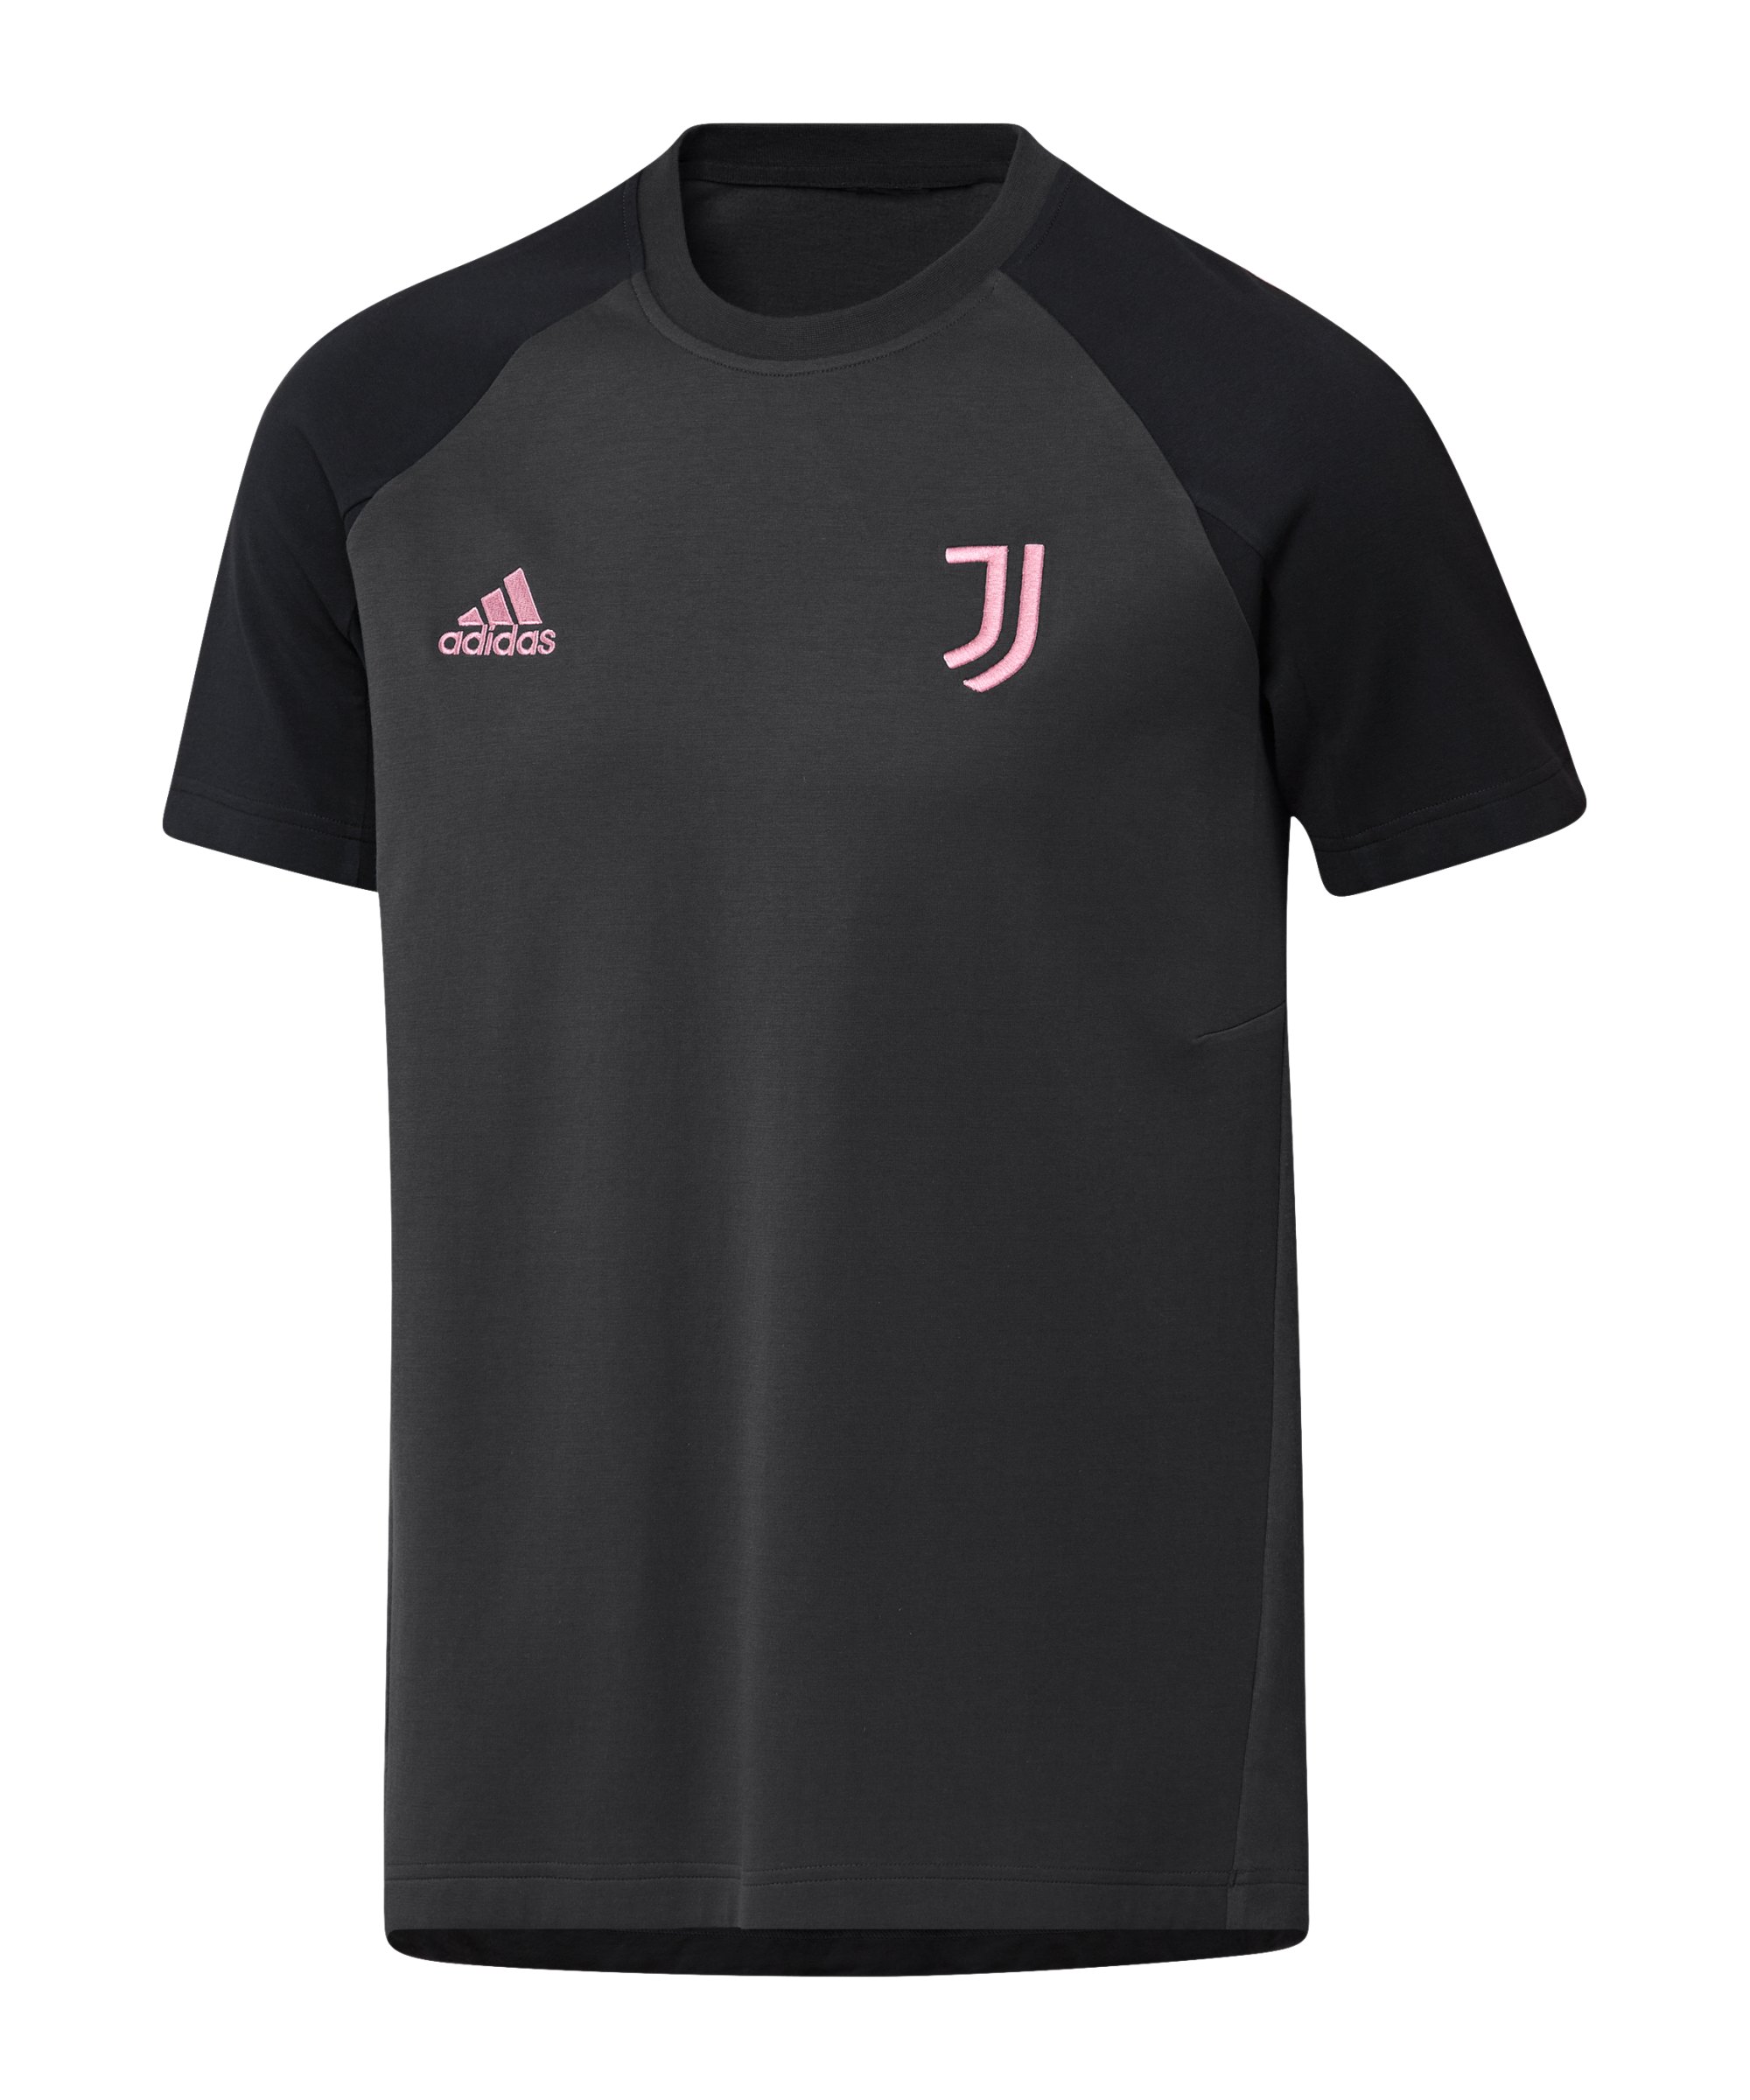 adidas Juventus Turin Travel T-Shirt Schwarz - schwarz